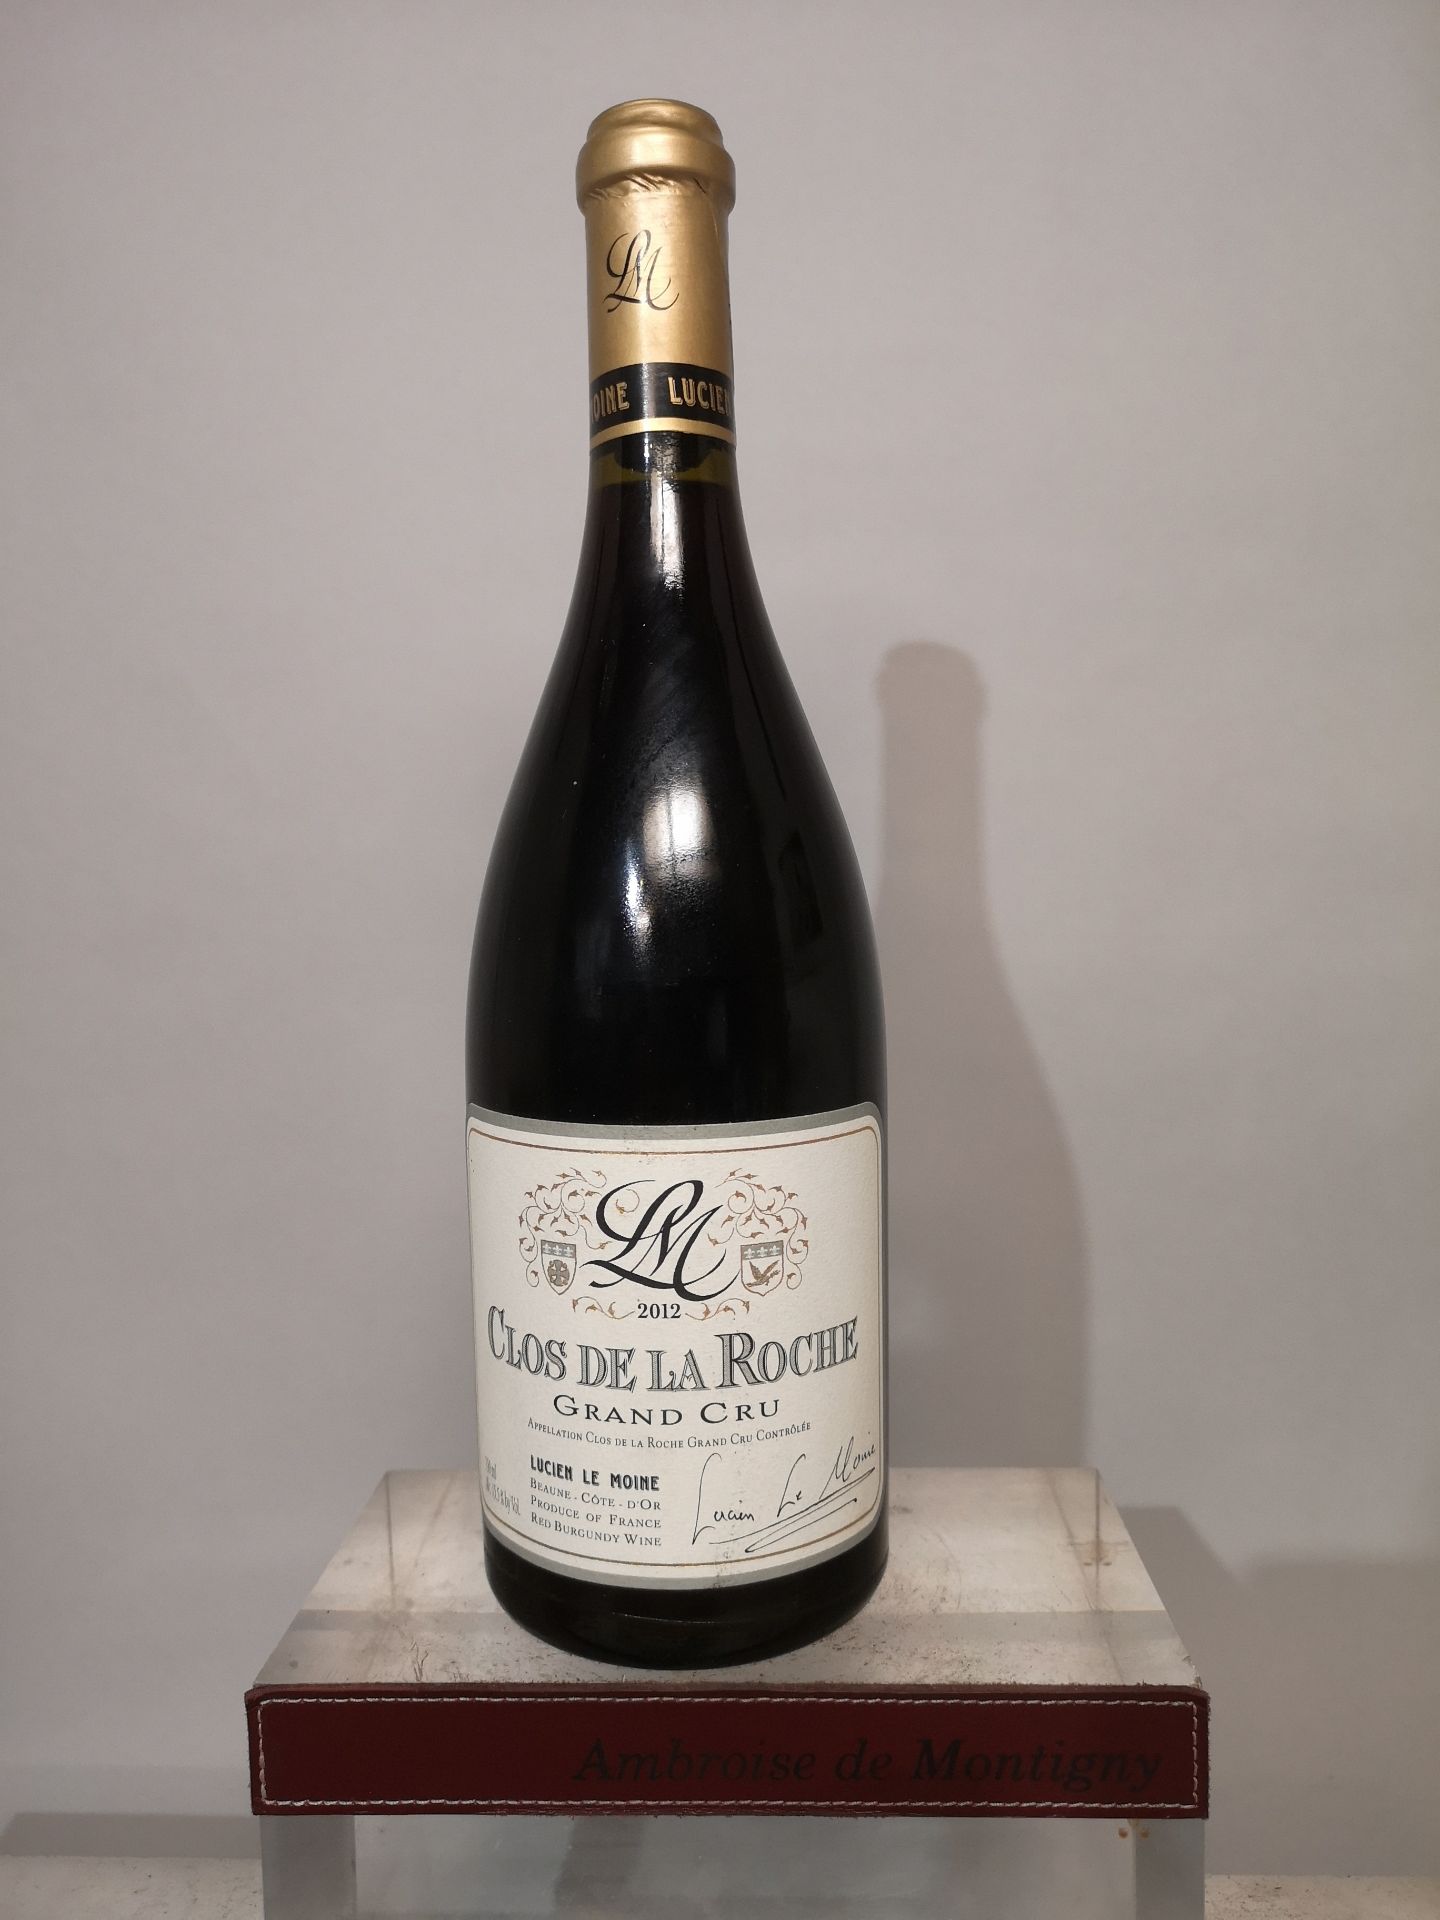 1 closed bottle of La Roche Grand Cru - Lucien Le Moine 2012.